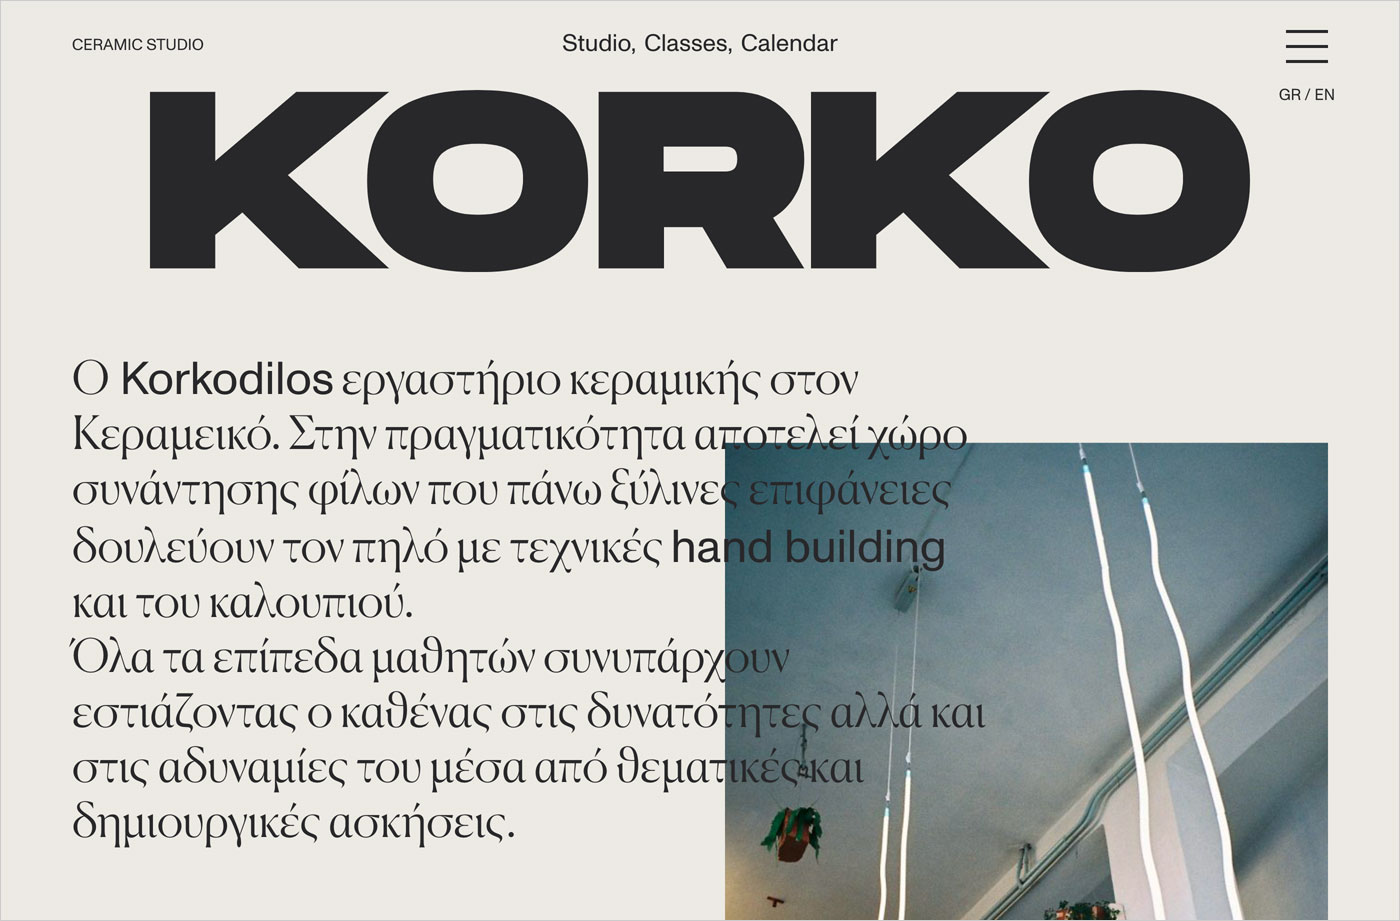 KORKODILOS – CERAMIC STUDIOウェブサイトの画面キャプチャ画像